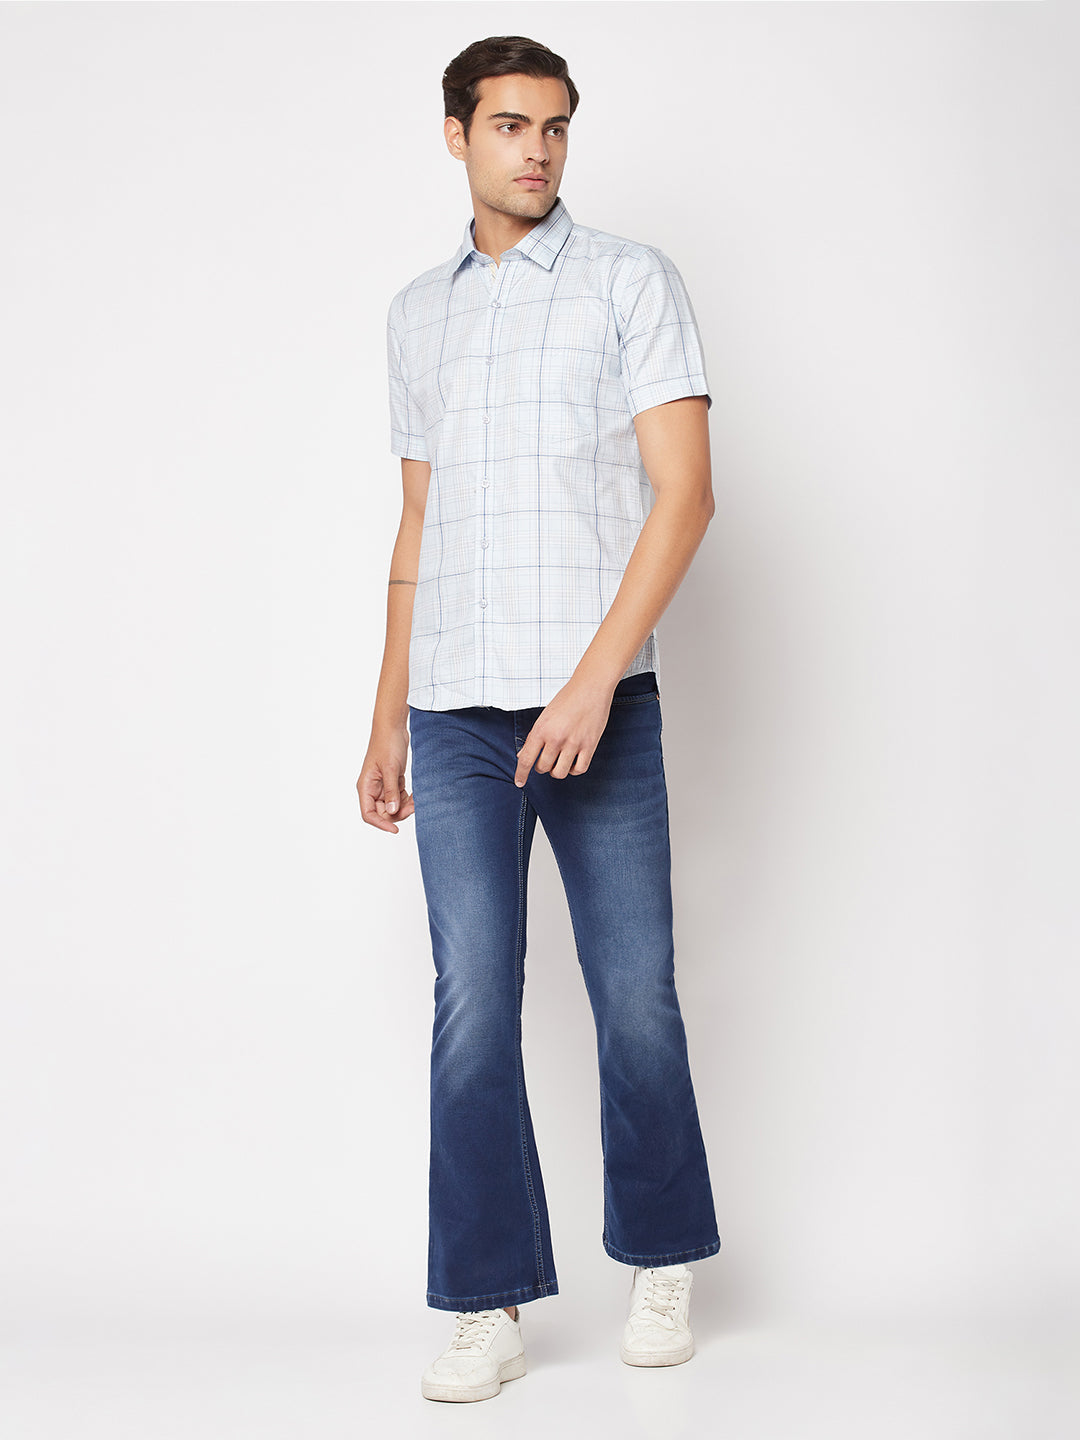  Short-Sleeved Blue Checked Shirt